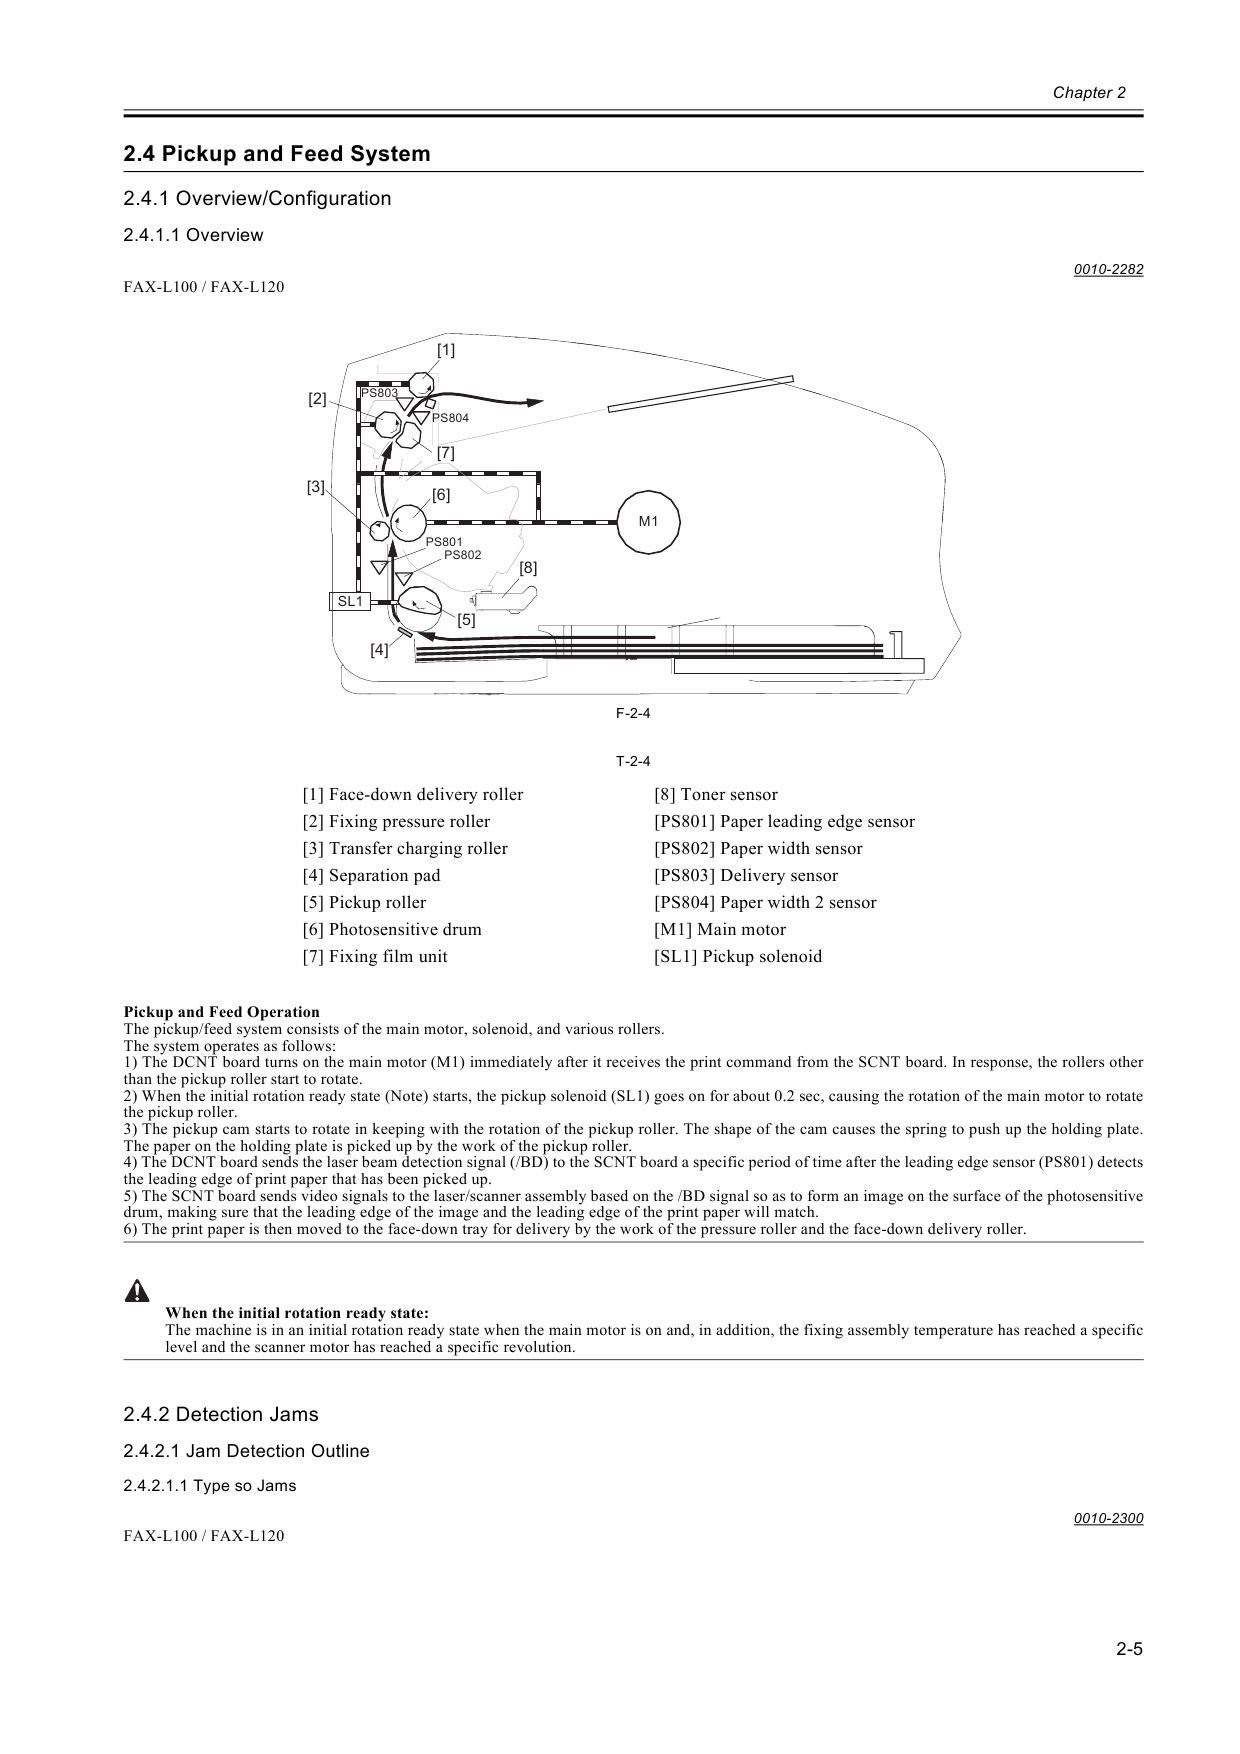 Canon FAX L100 L120 Parts and Service Manual-2